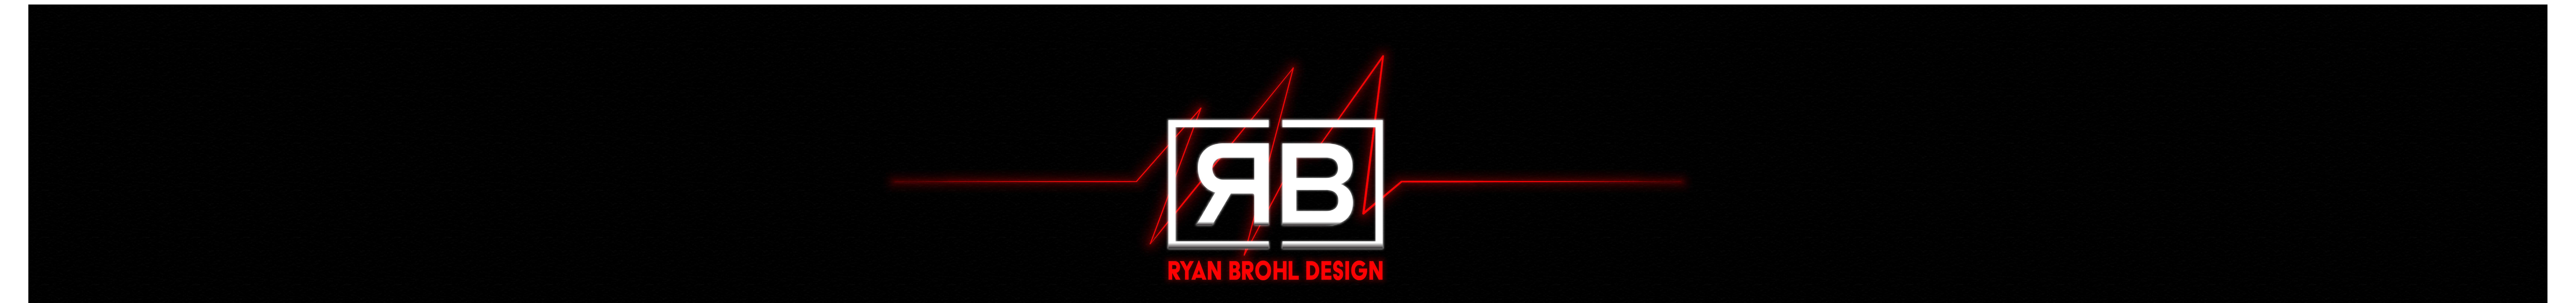 Banner de perfil de Ryan Brohl